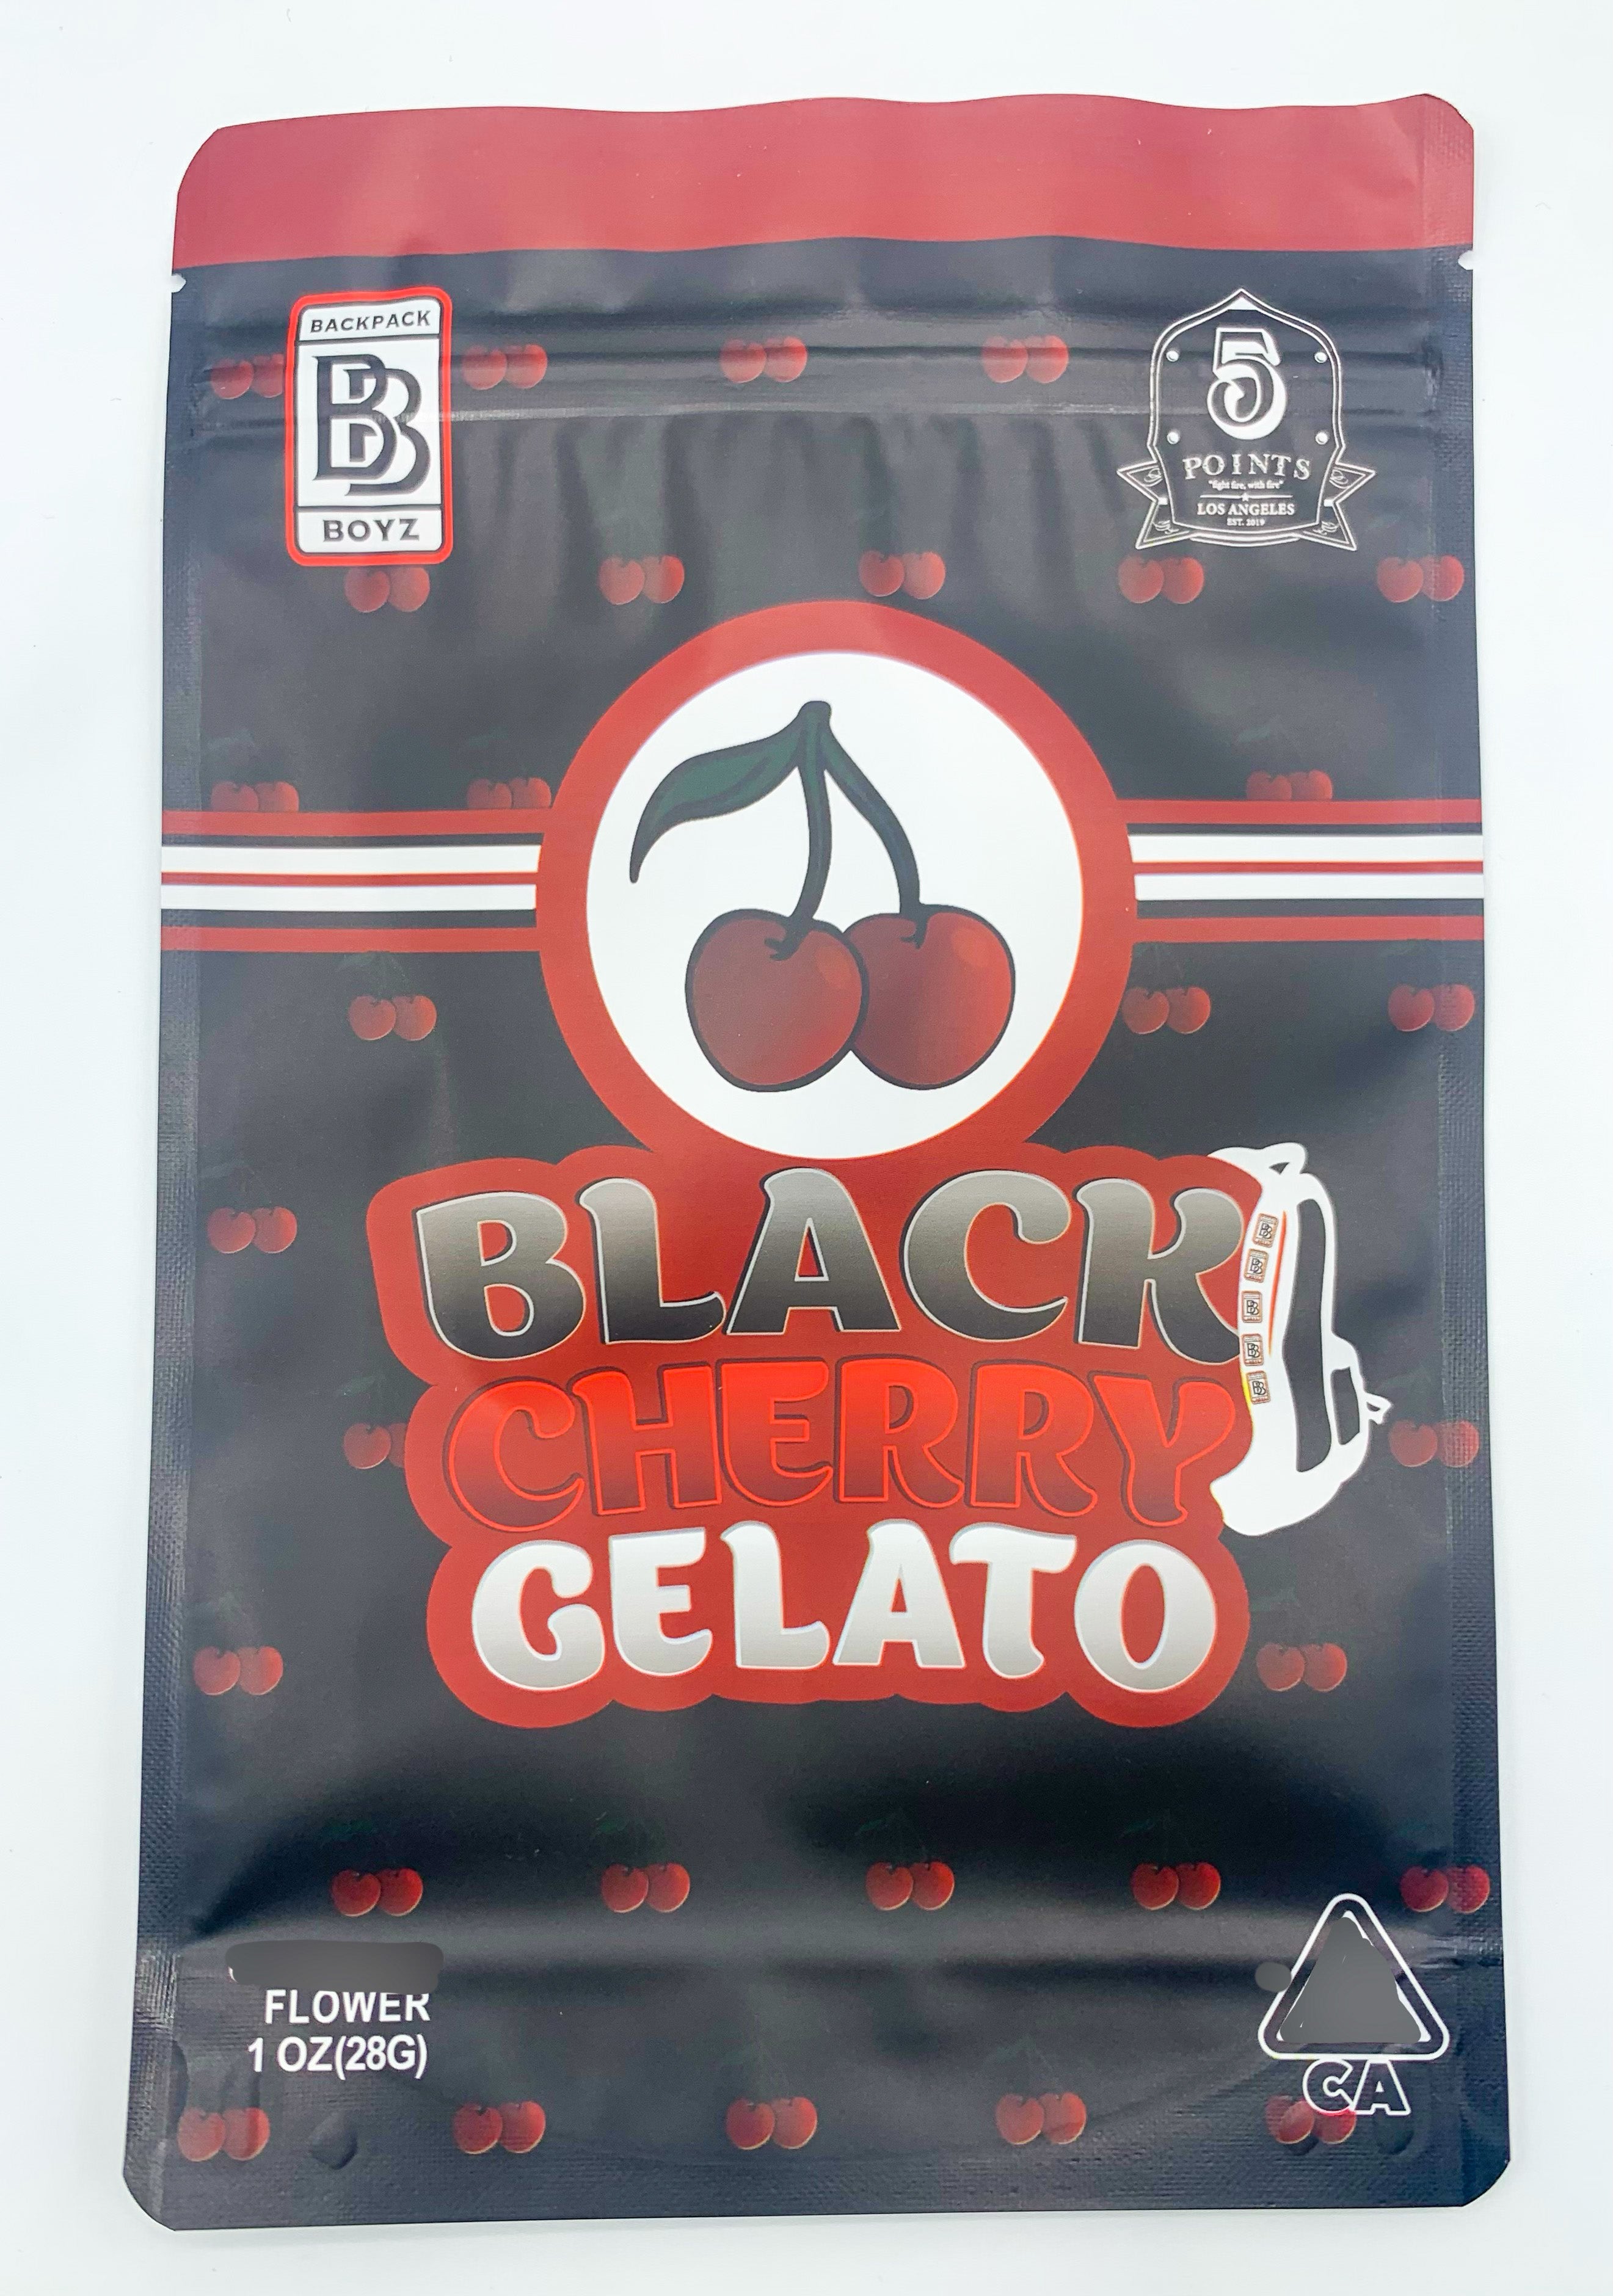 1 oz (28g) Backpack Boyz Black Cherry Gelato Mylar bags